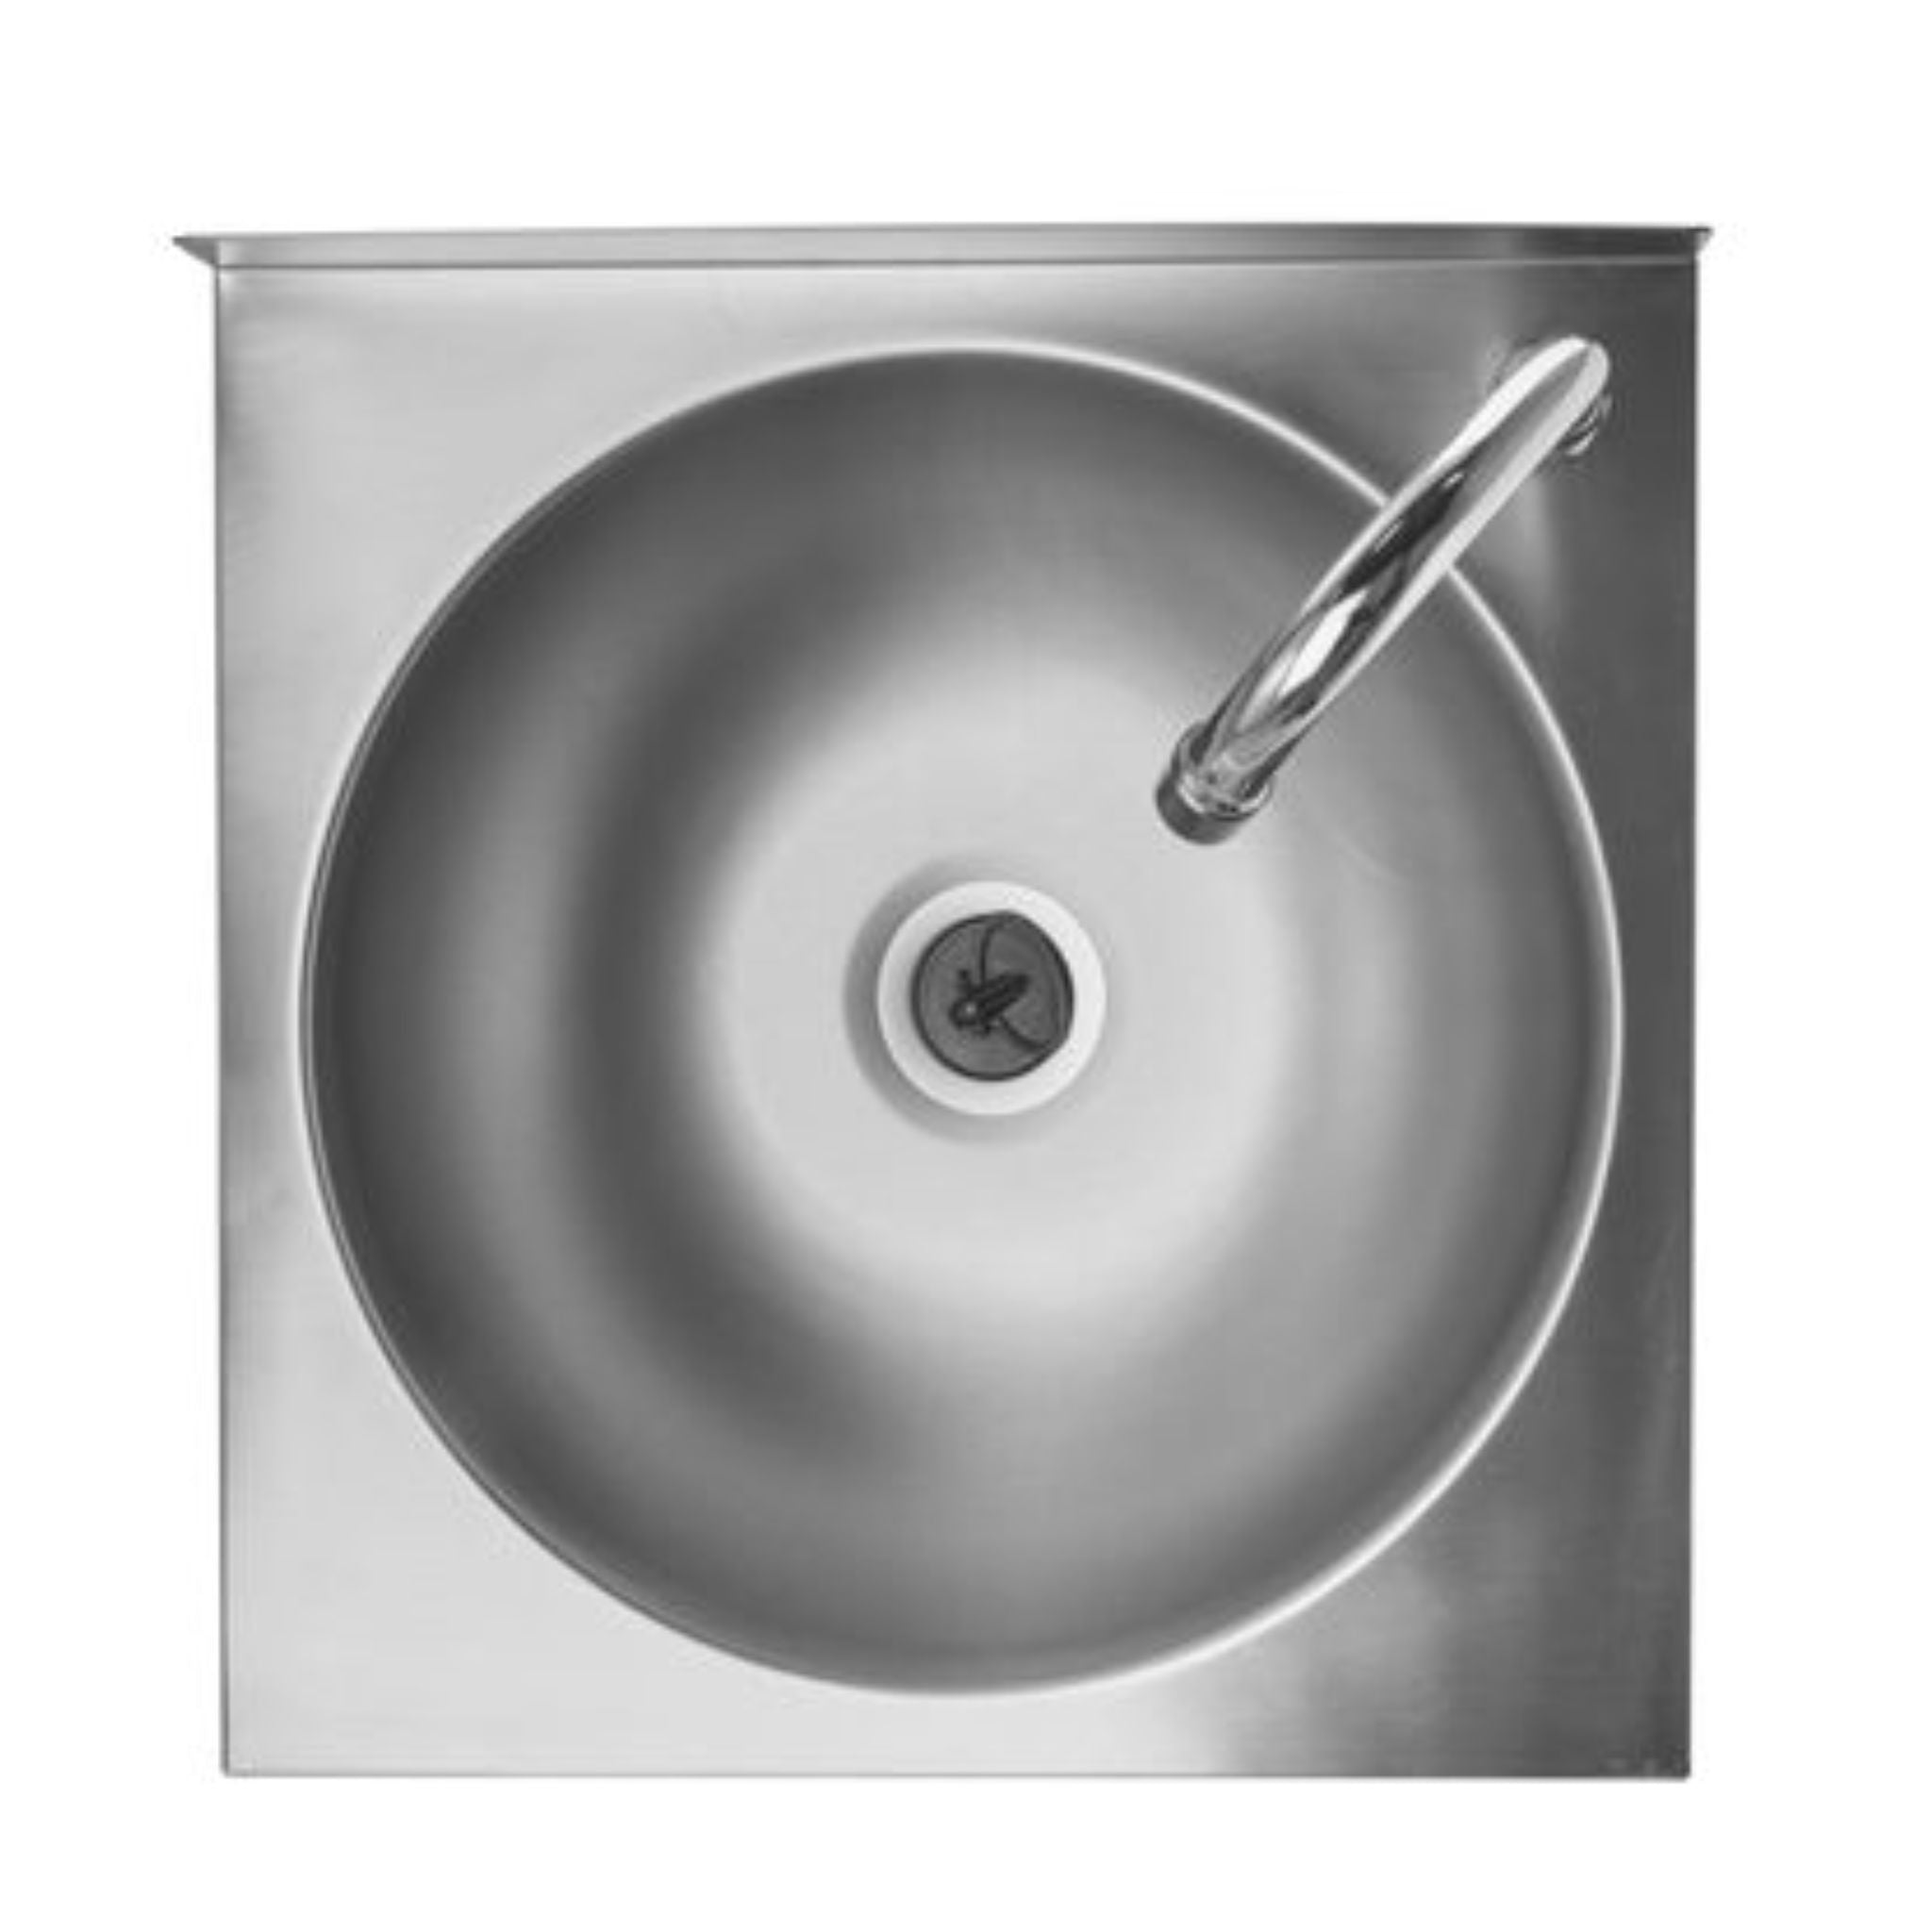 Standard stainless steel wash hand basin